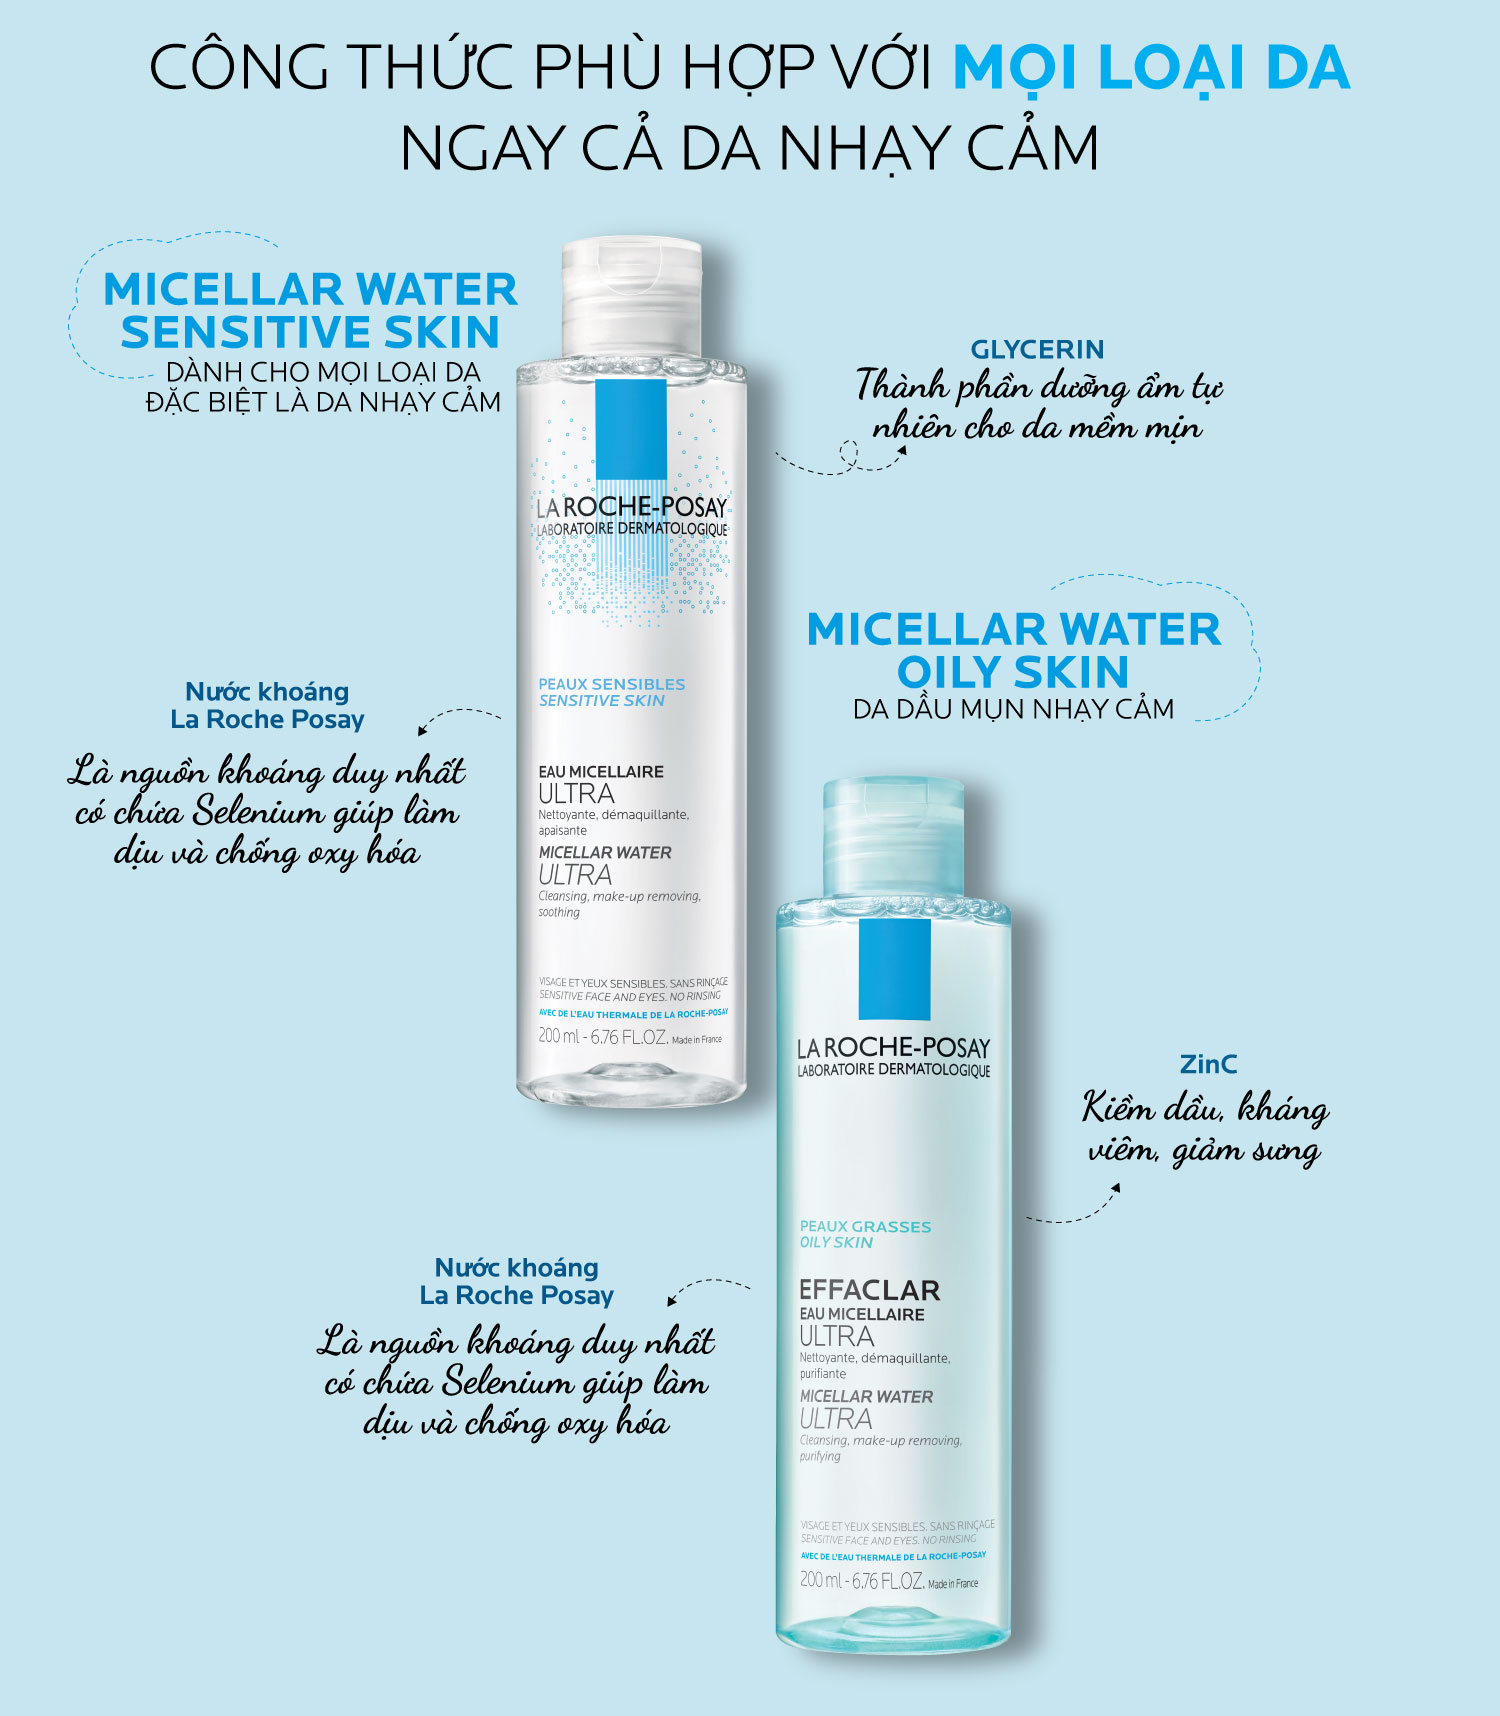 Hai dòng nổi bật Tẩy Trang La Roche Posay Effaclar Micellar Water Ultra Oily Skin